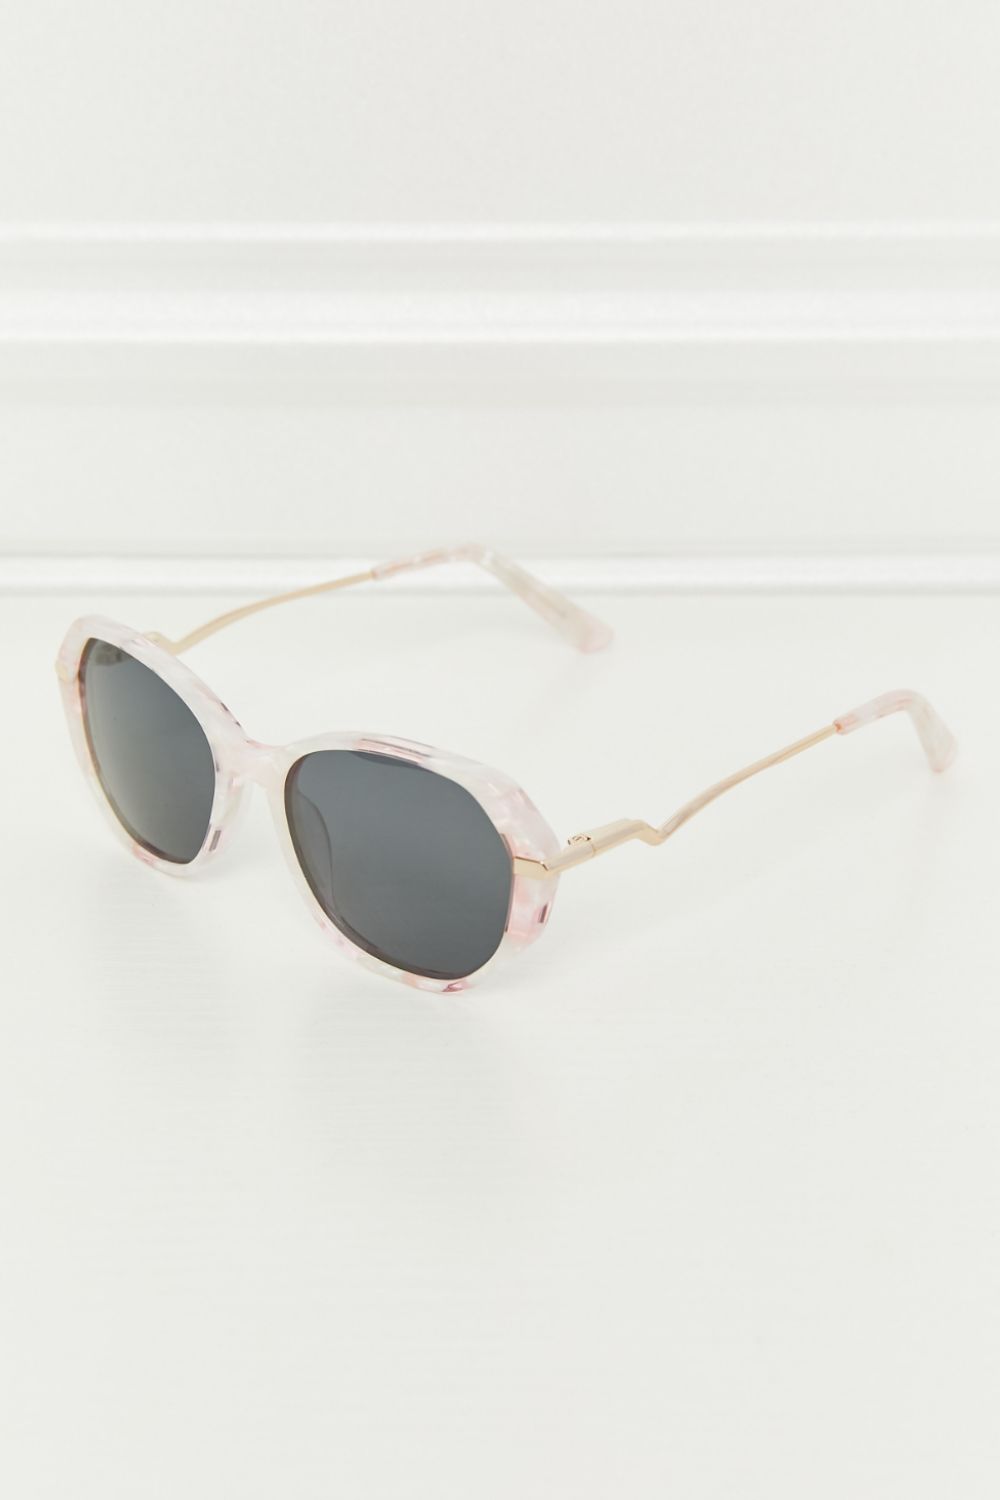 Glam TAC Polarization Lens Sunglasses Blush Pink One Size